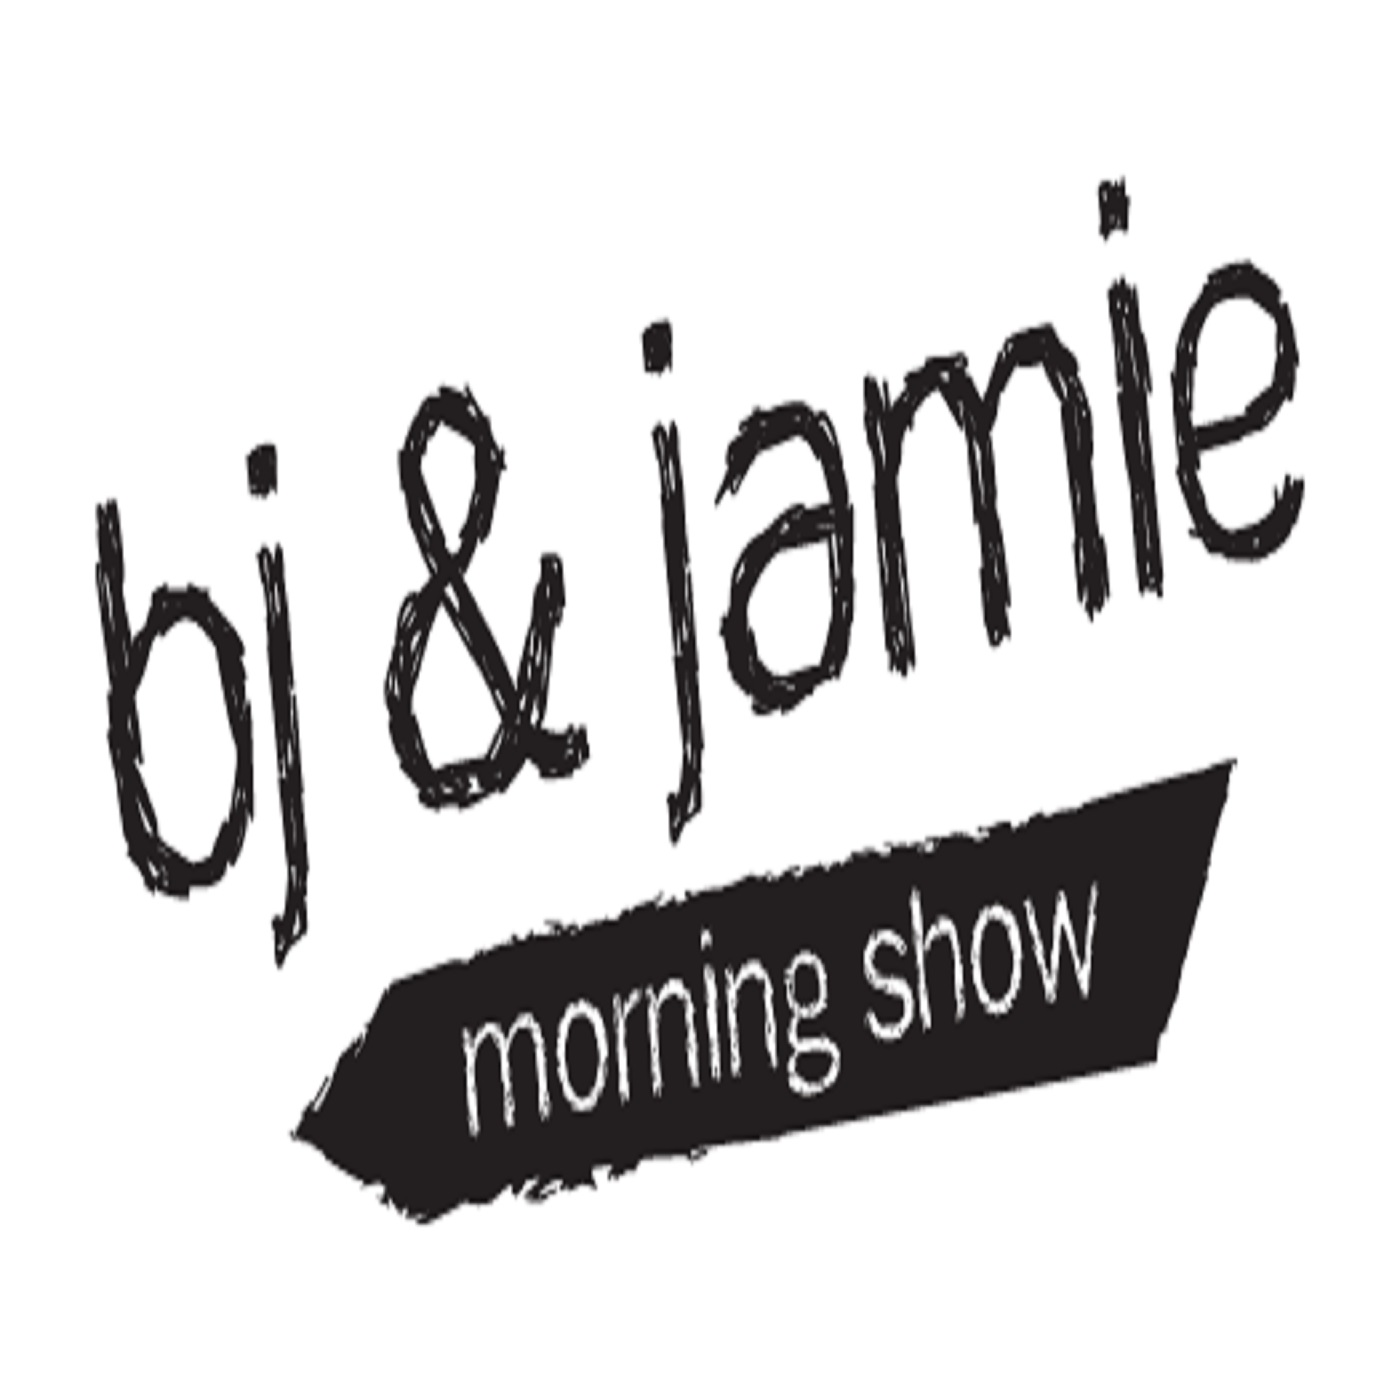 BJ & Jamie: Pot is making people vomit. 12/6